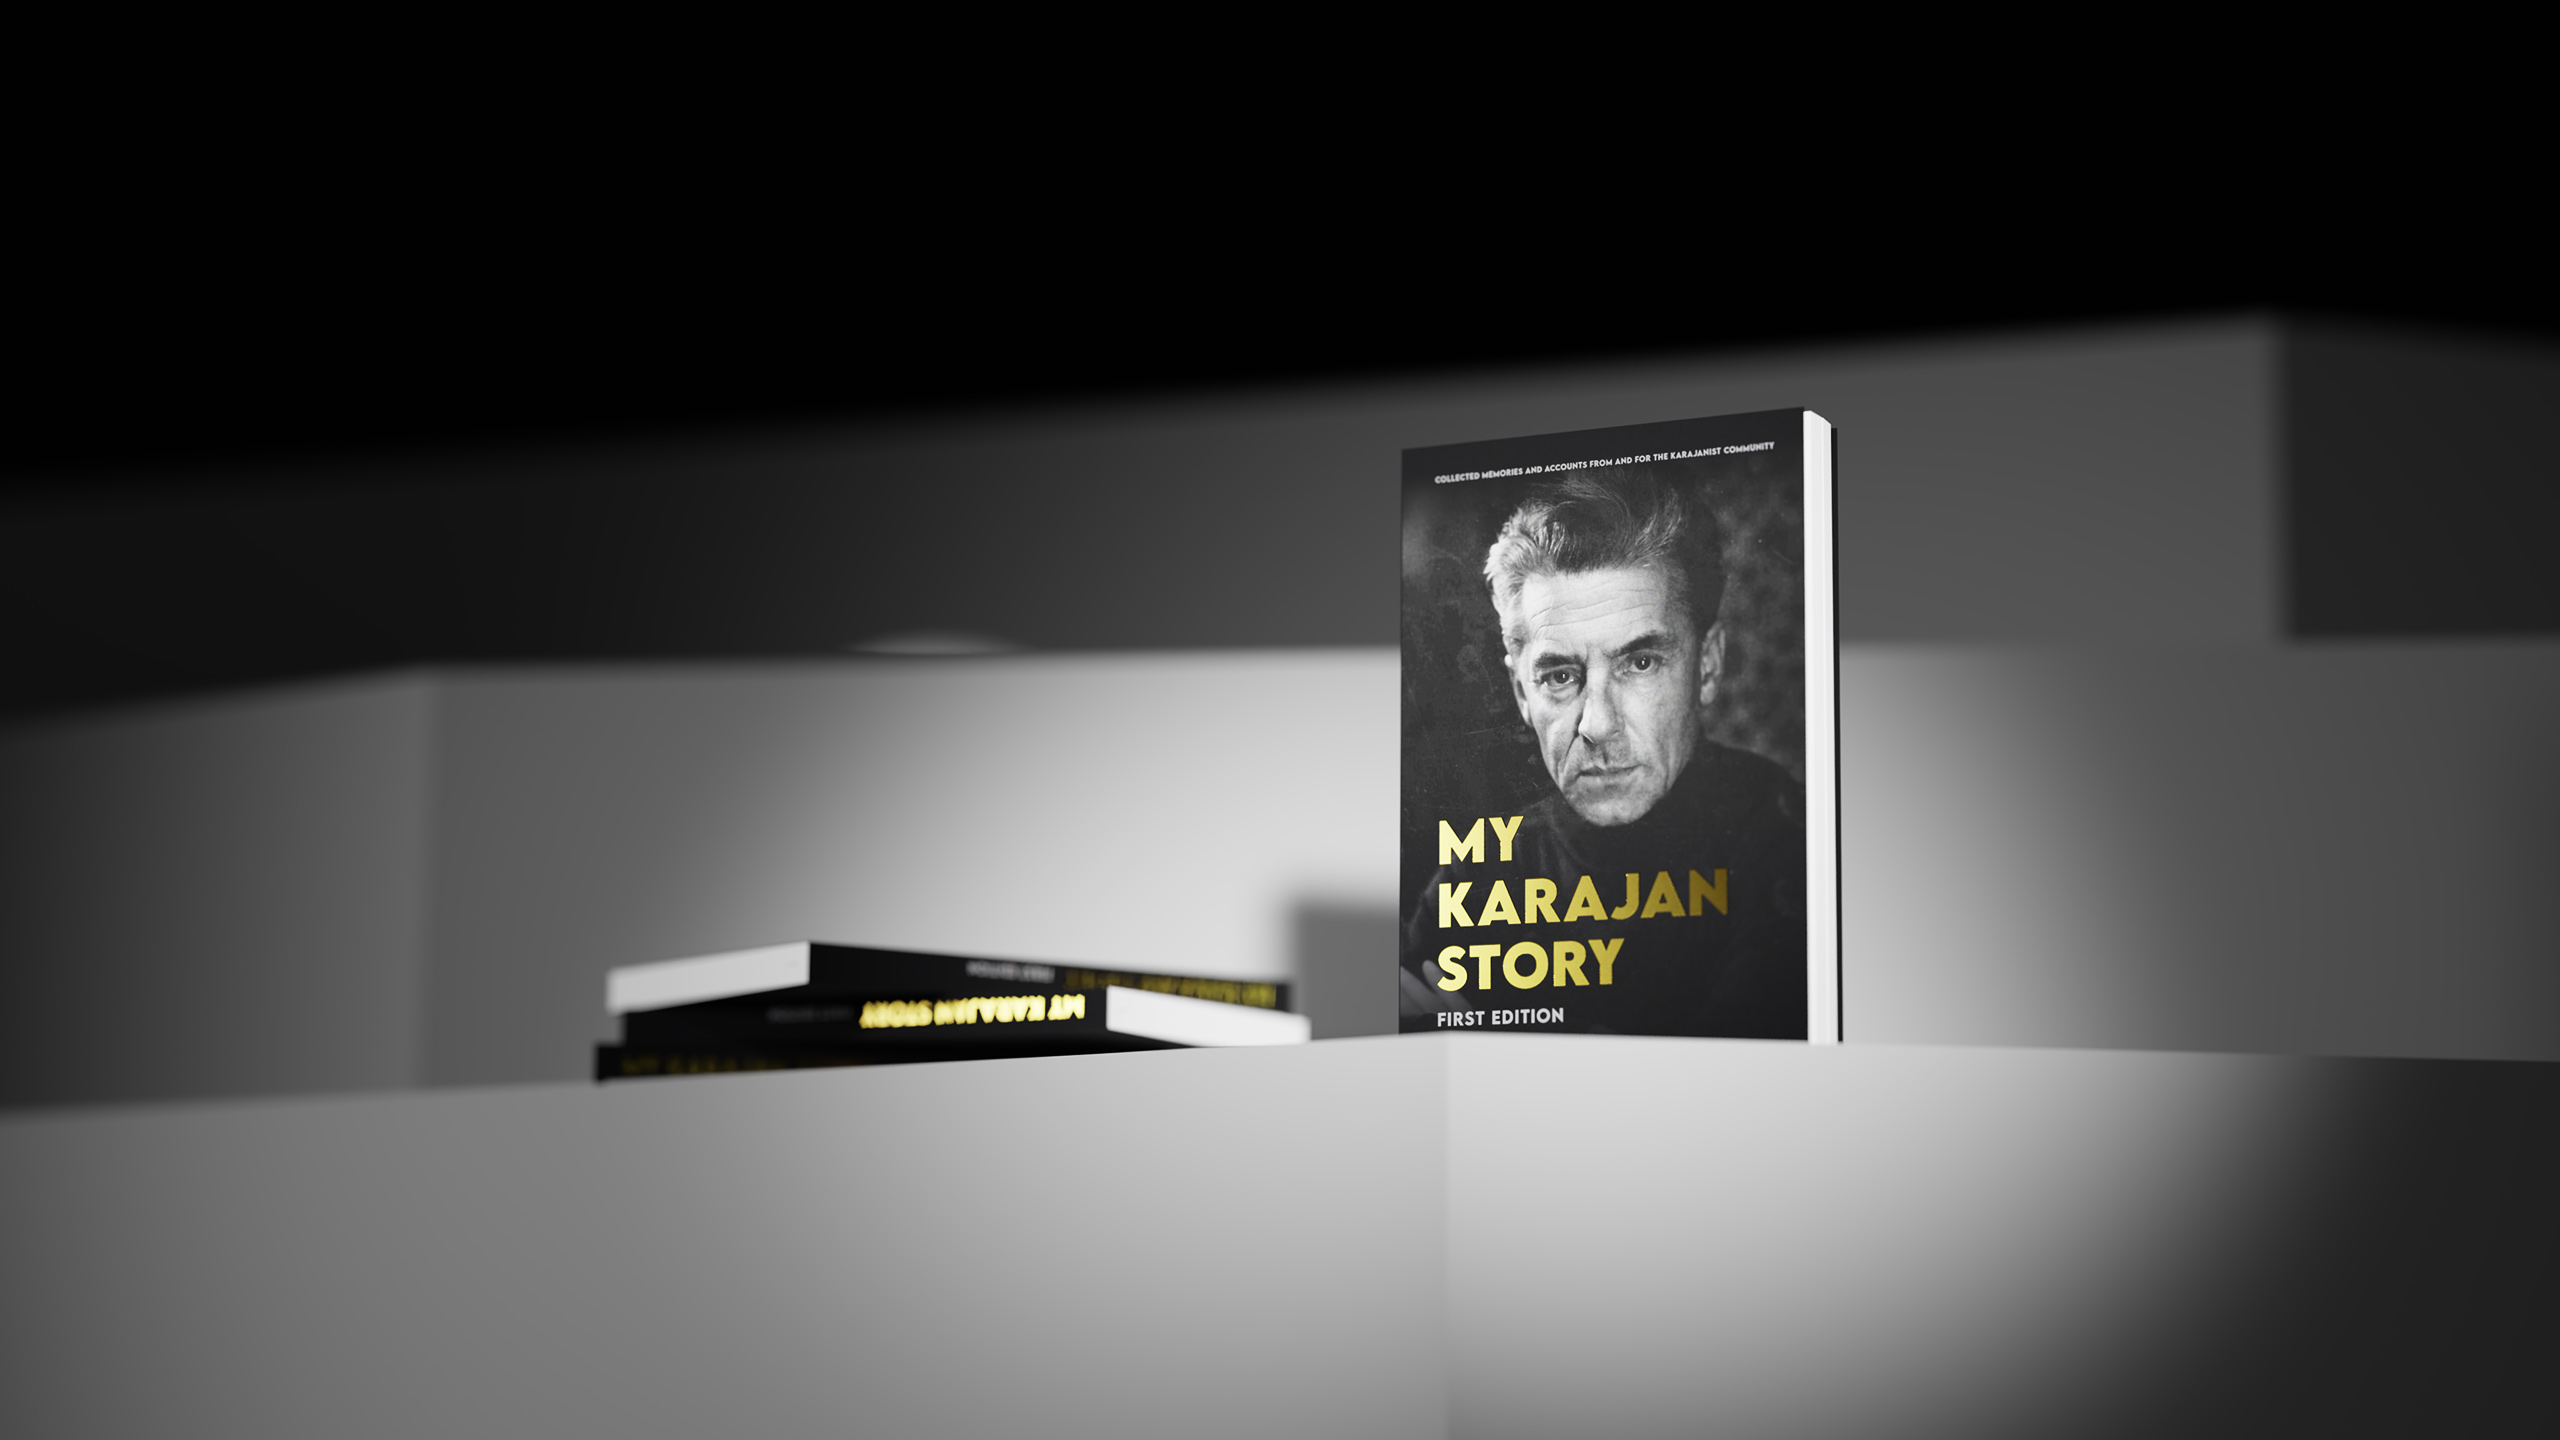 My Karajan Story